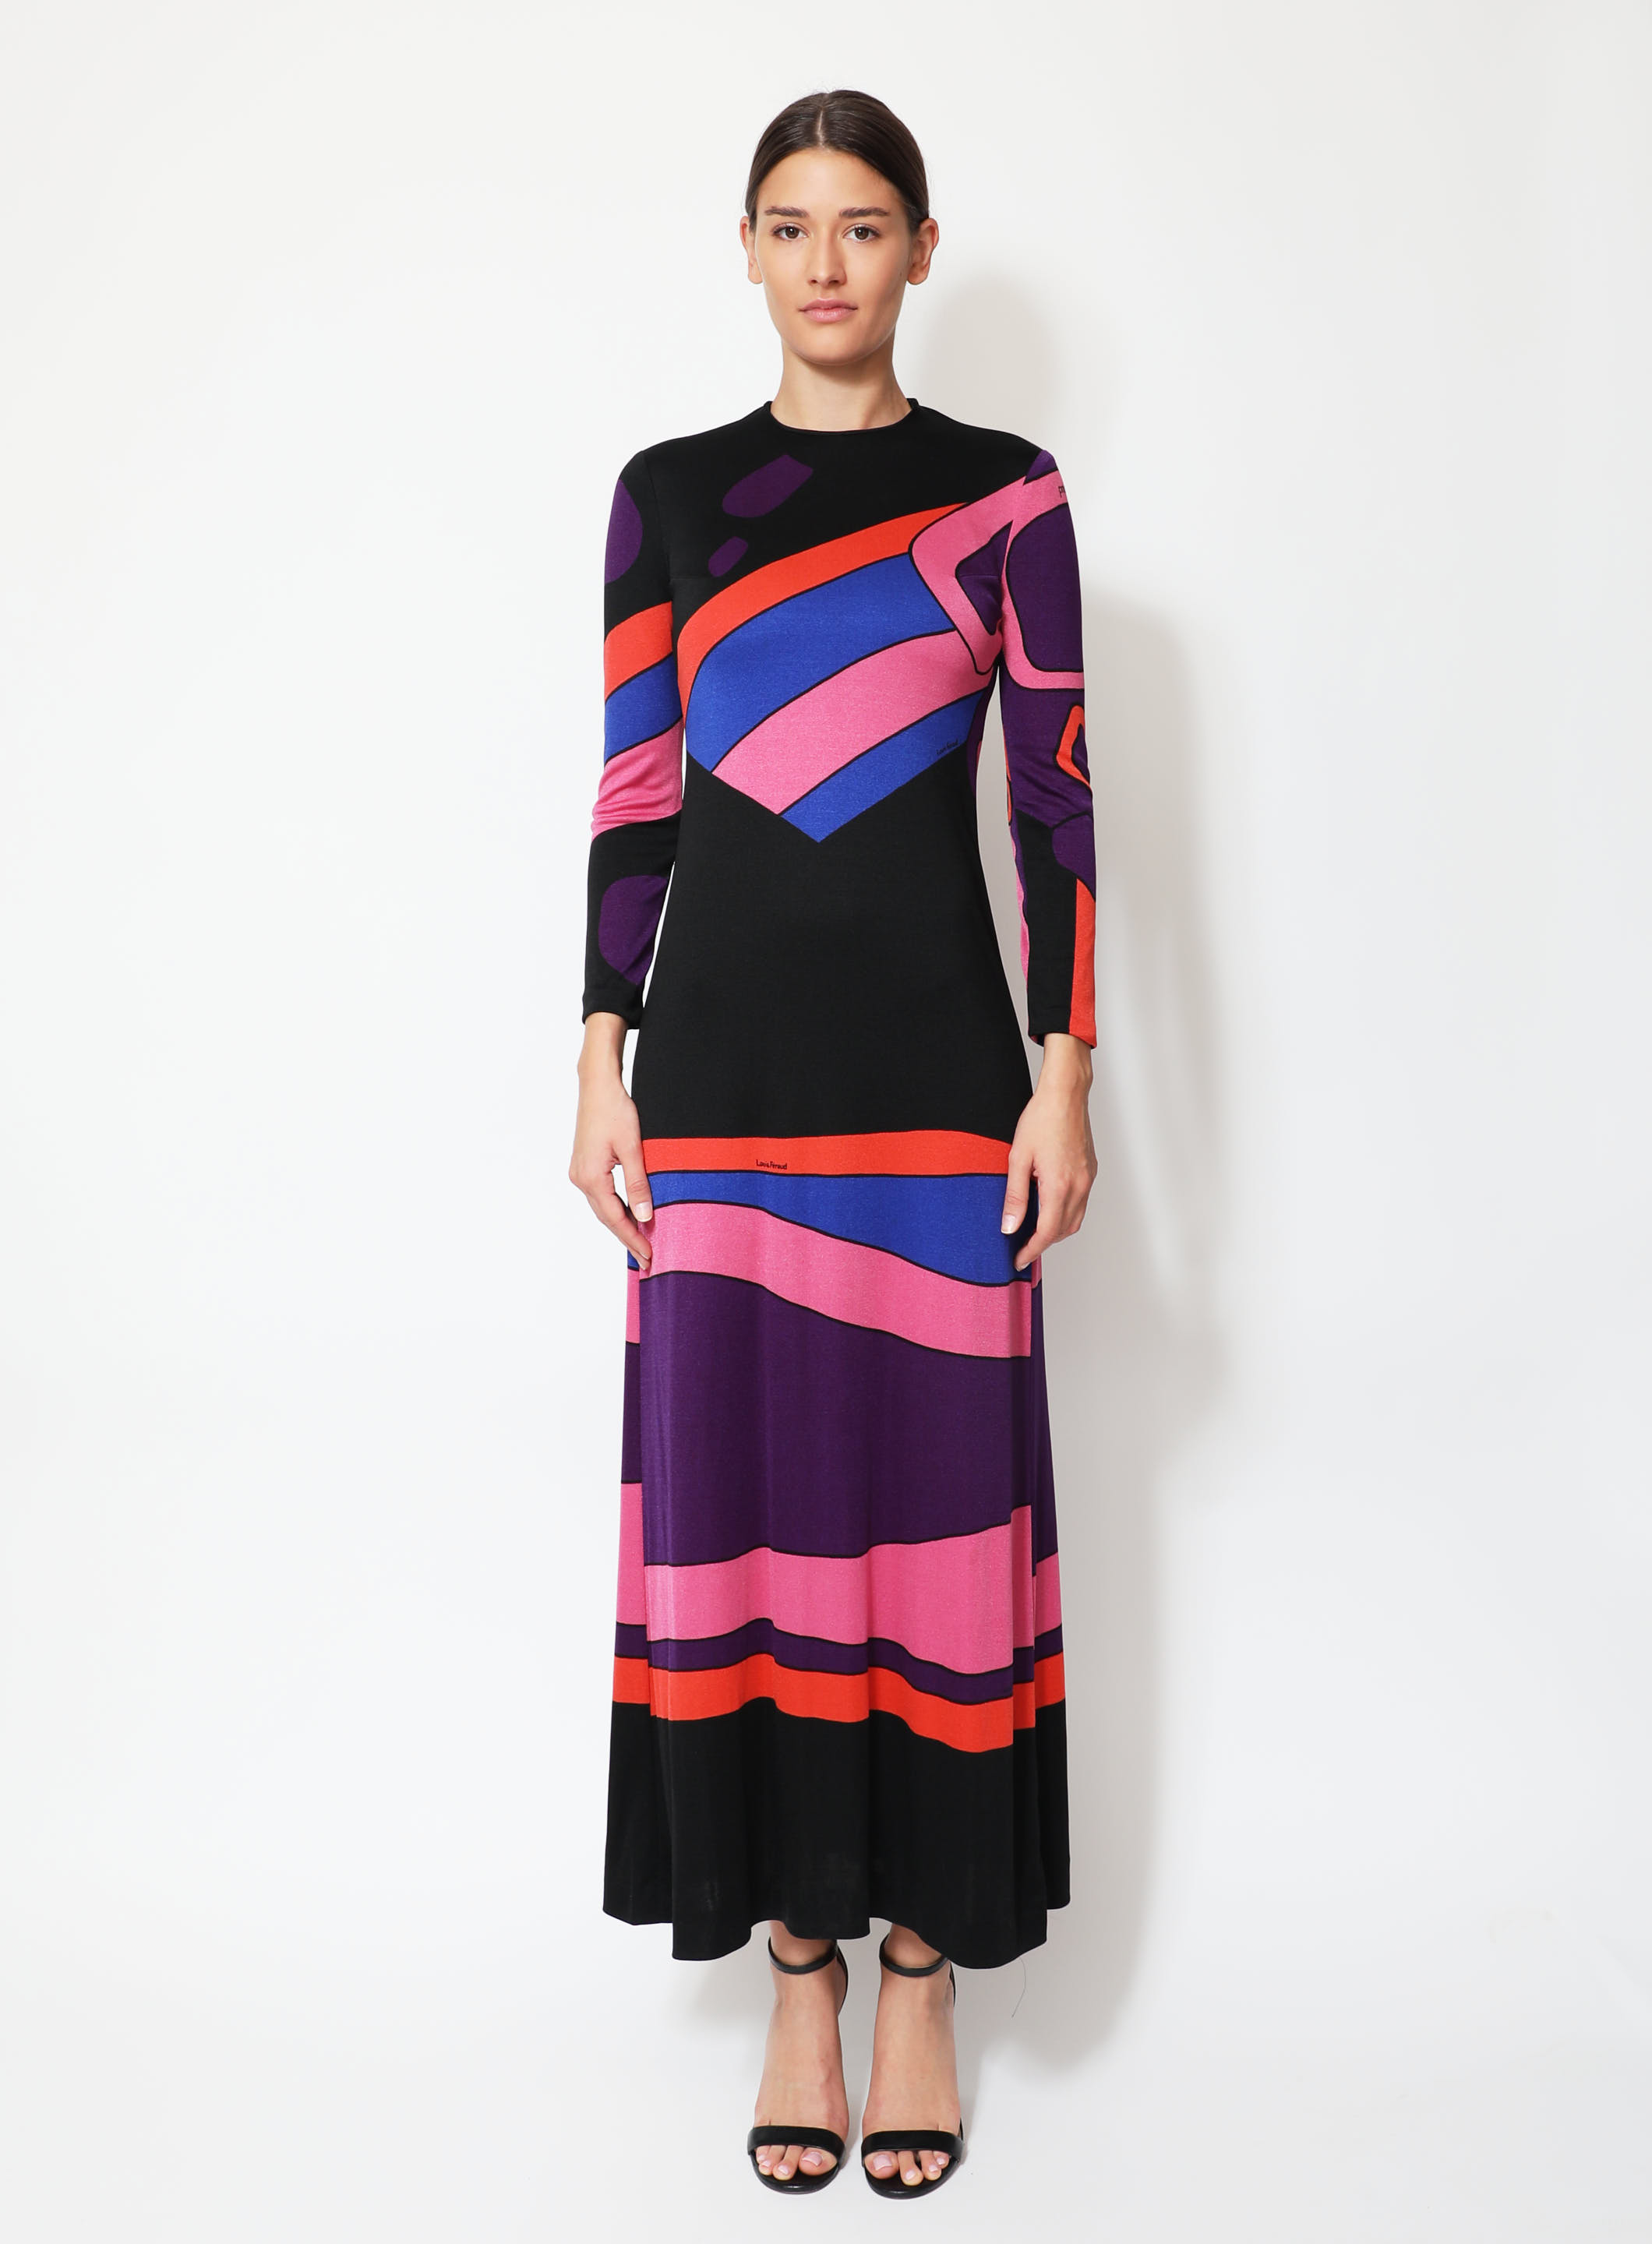 Women's 3 Piece Louis Feraud Paris Couture Skirt Blazer &